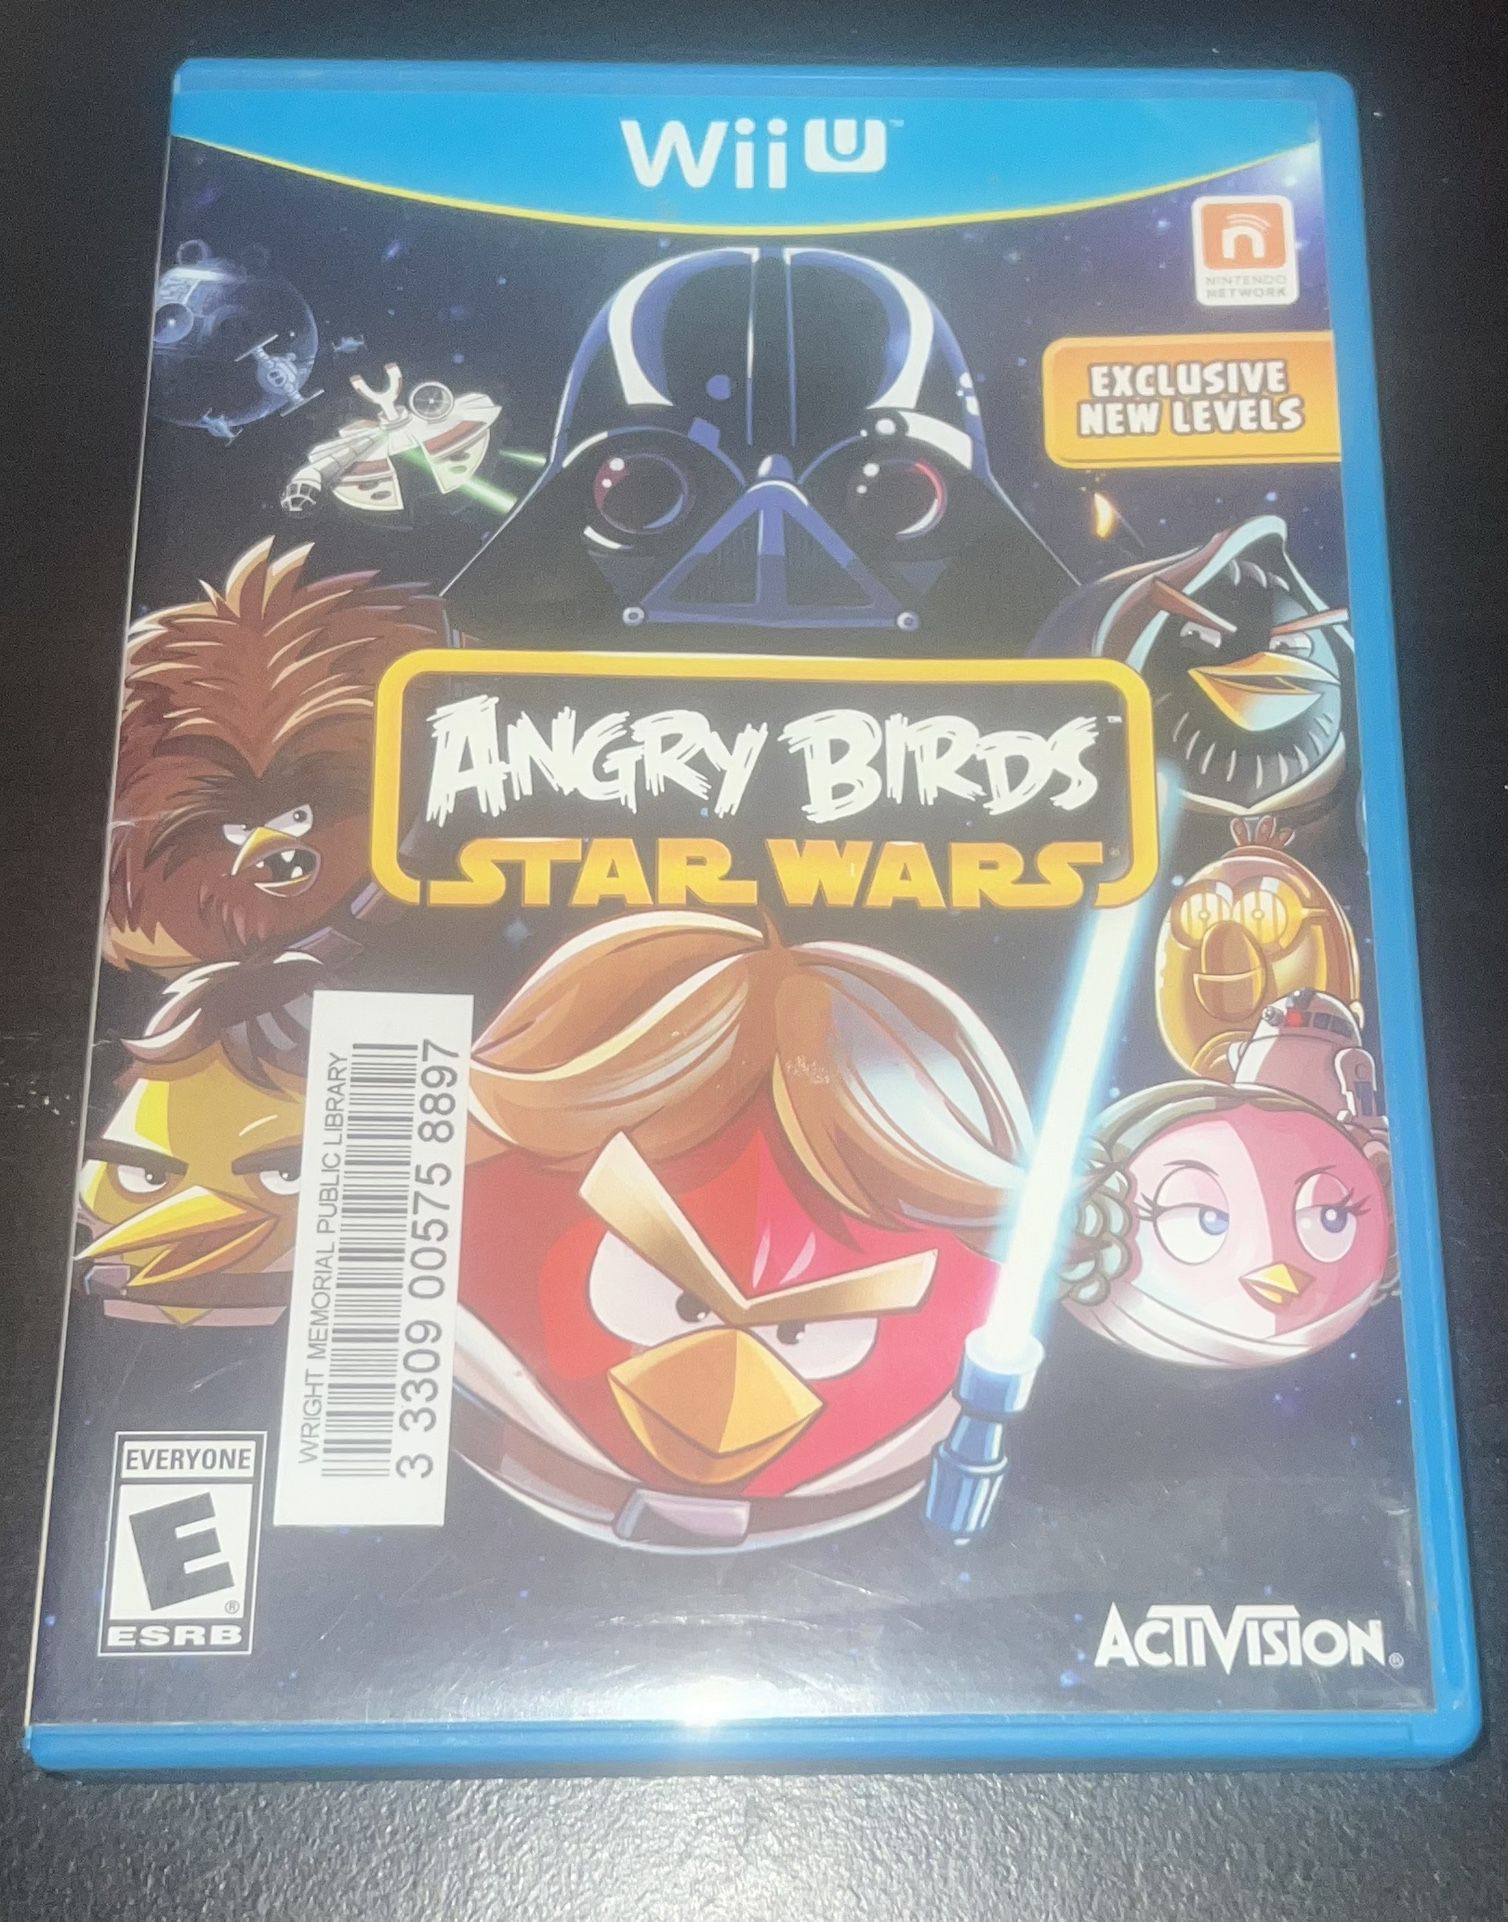 Angry Birds Star Wars - Nintendo Wii U/Wii (Description)